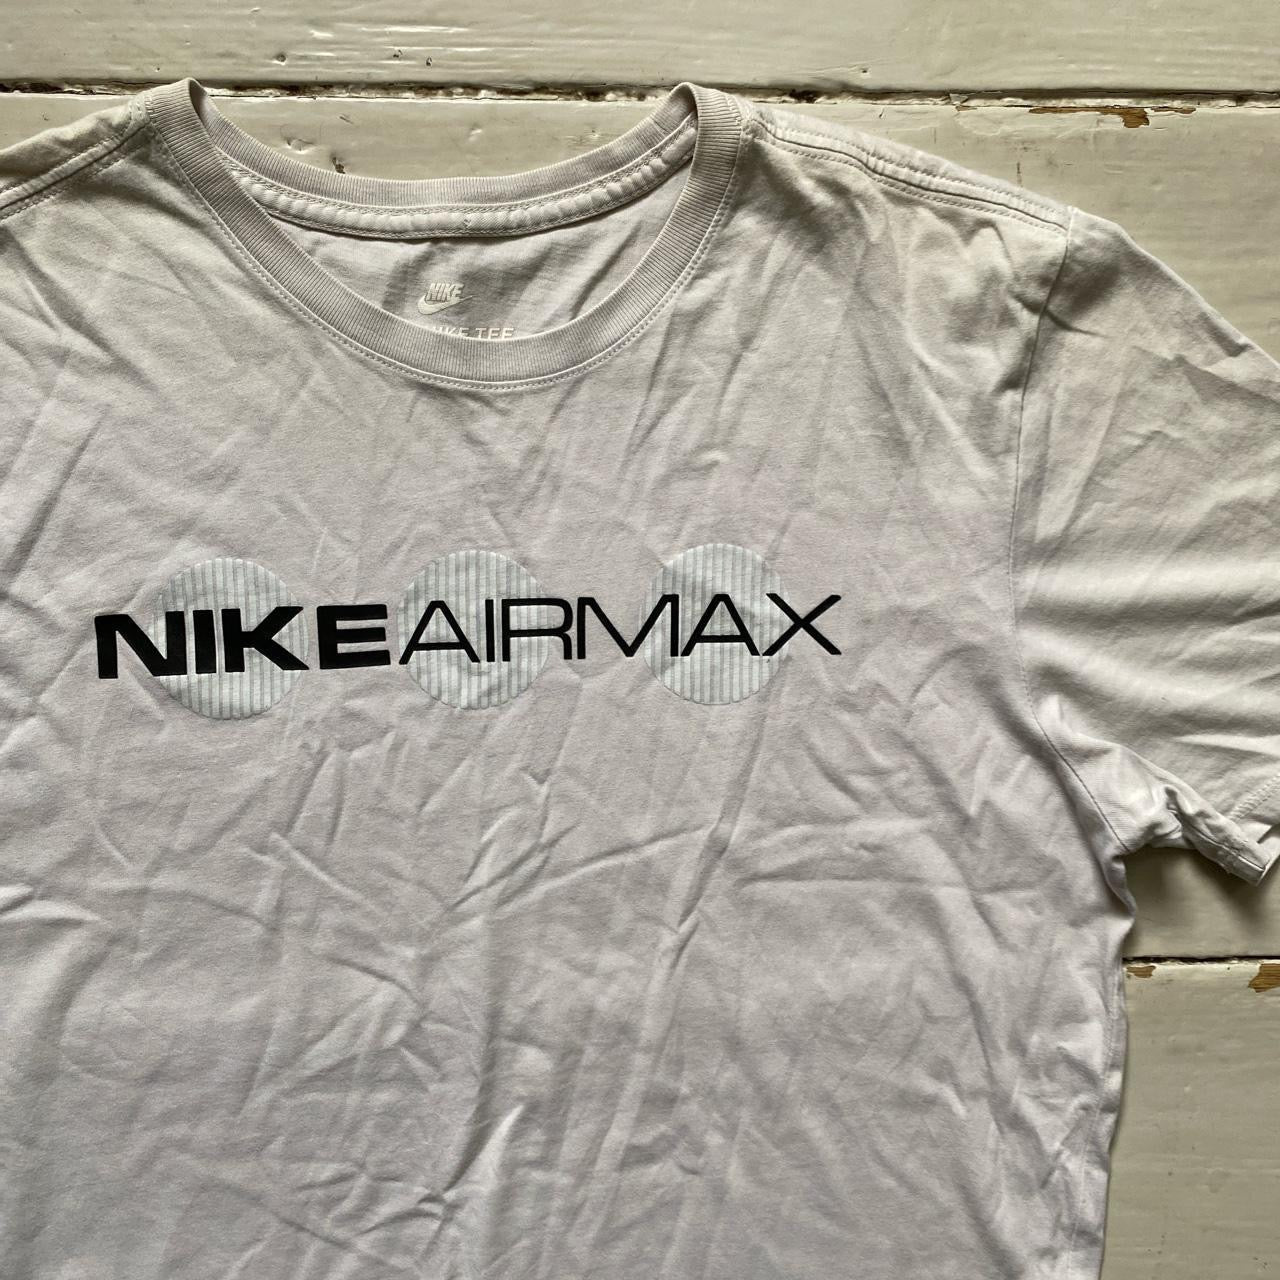 Nike Air Max T Shirt (Medium)